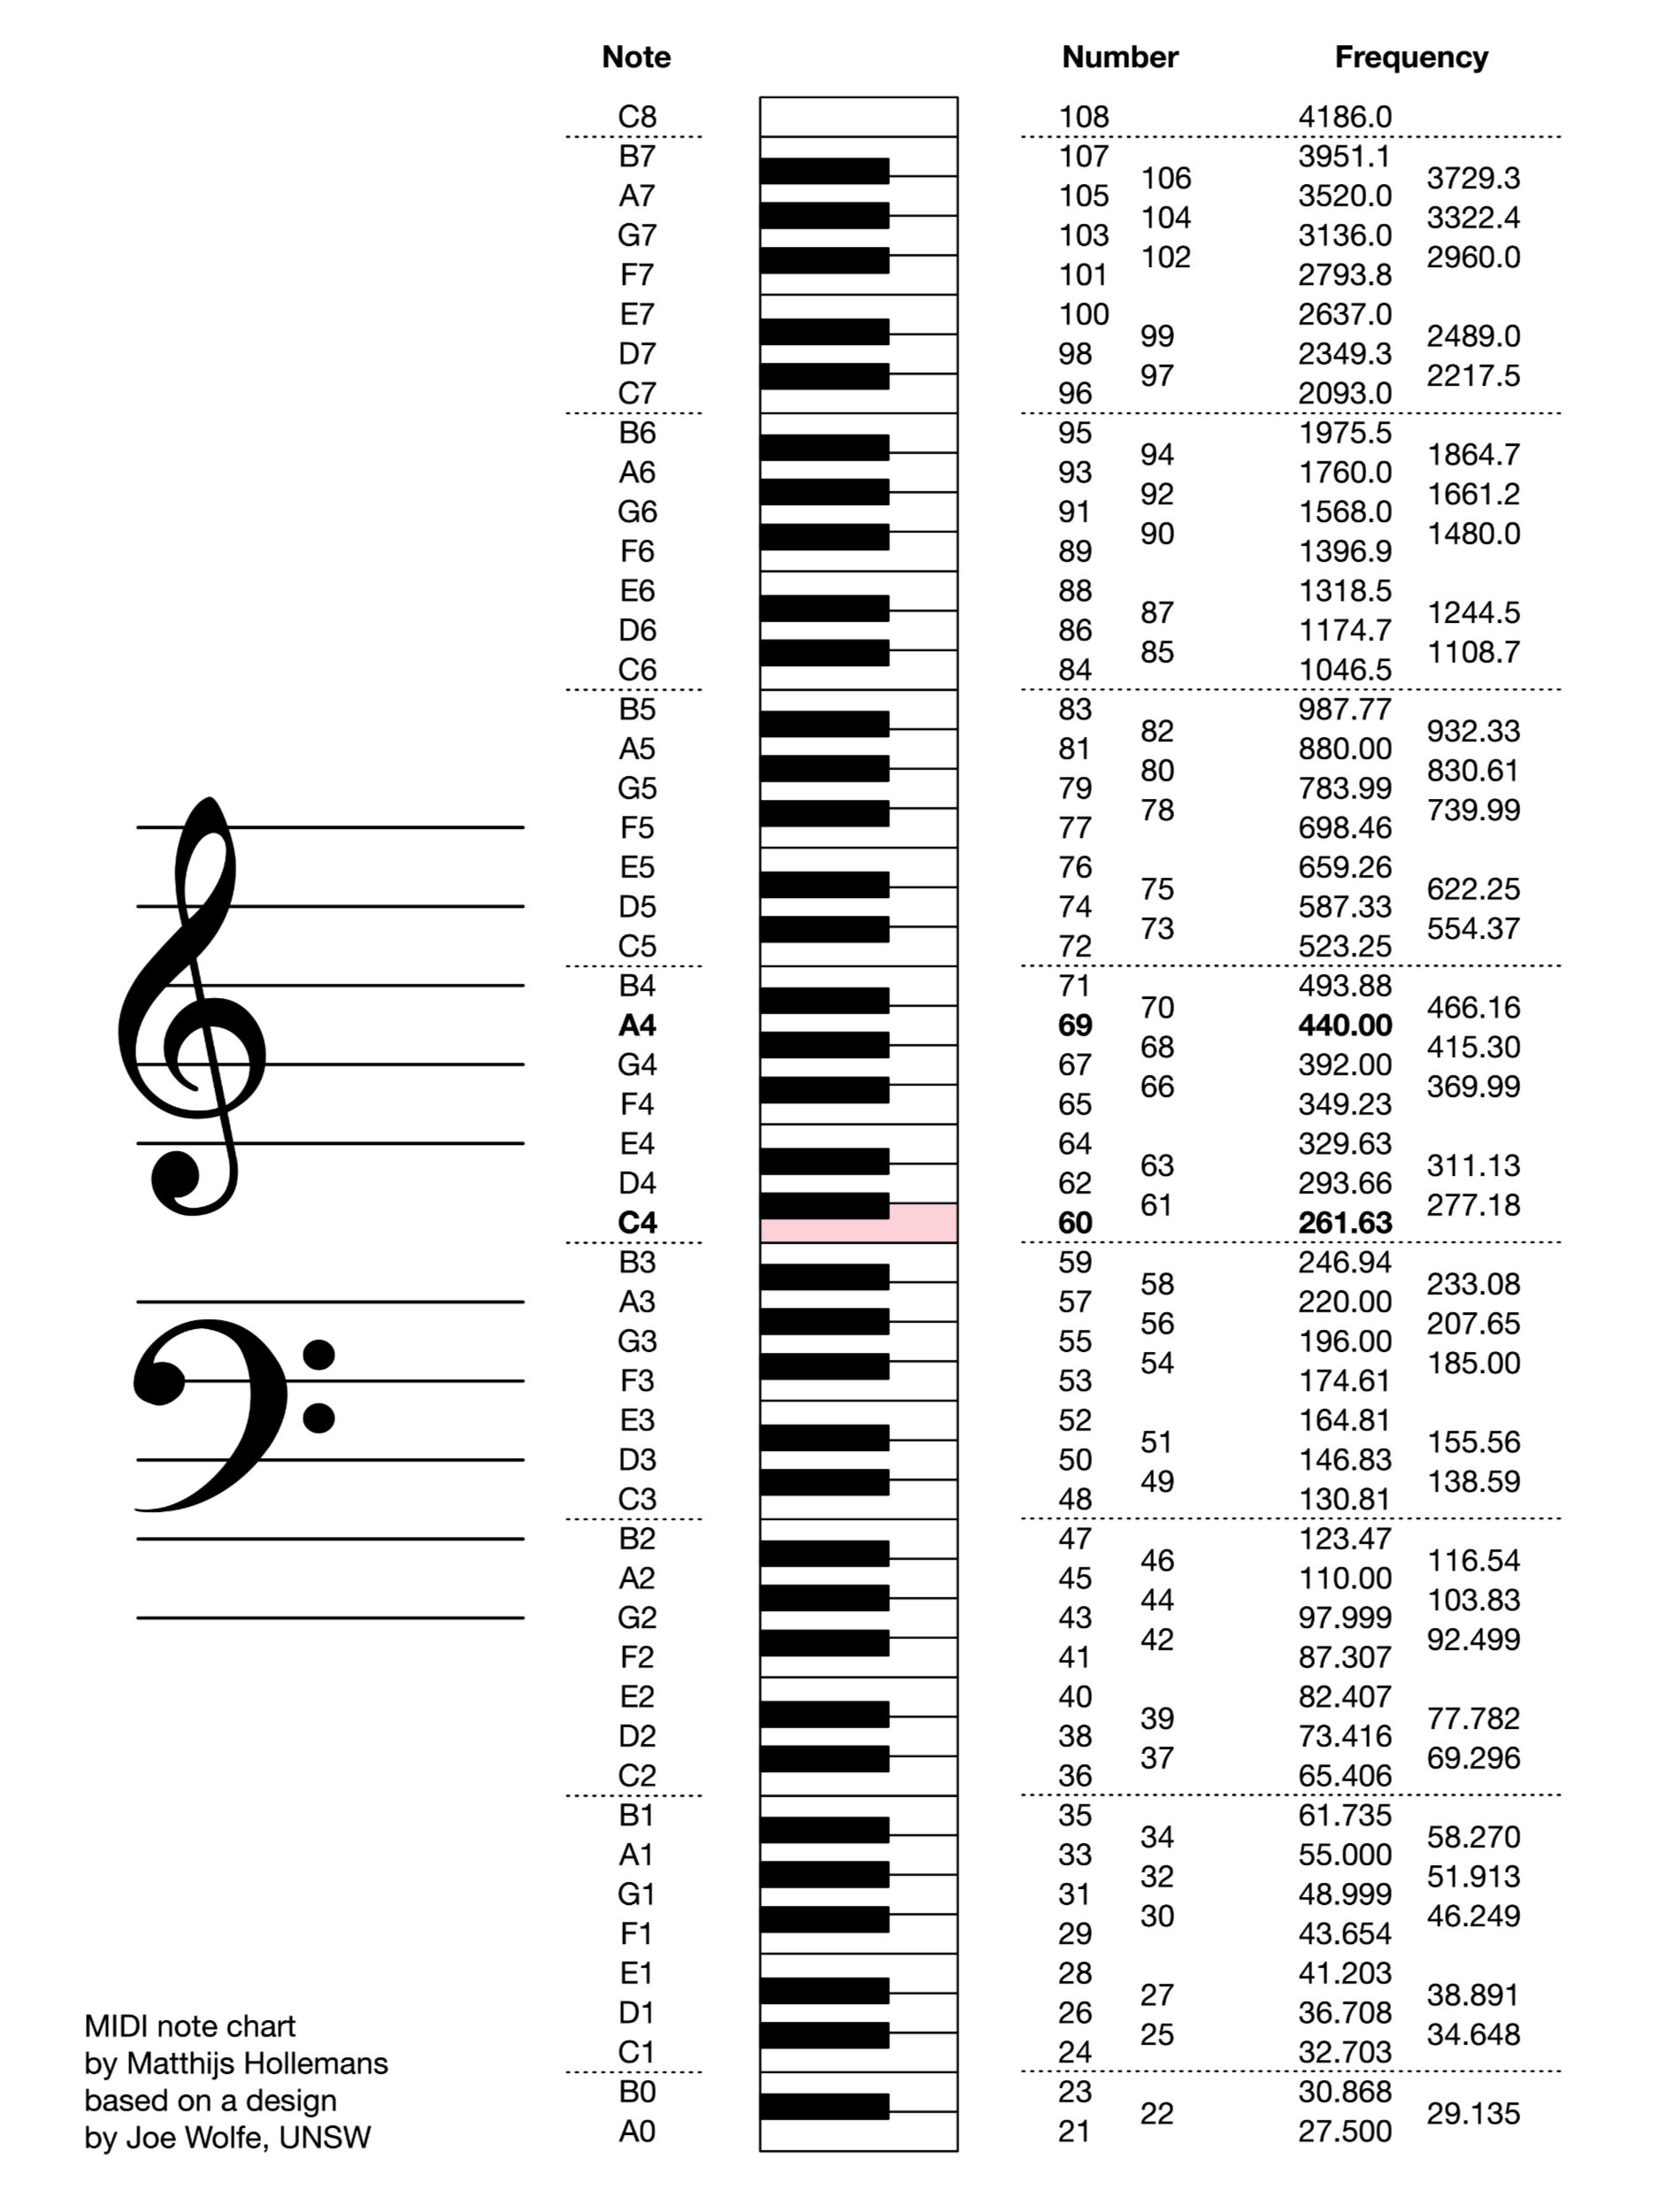 The MIDI note chart